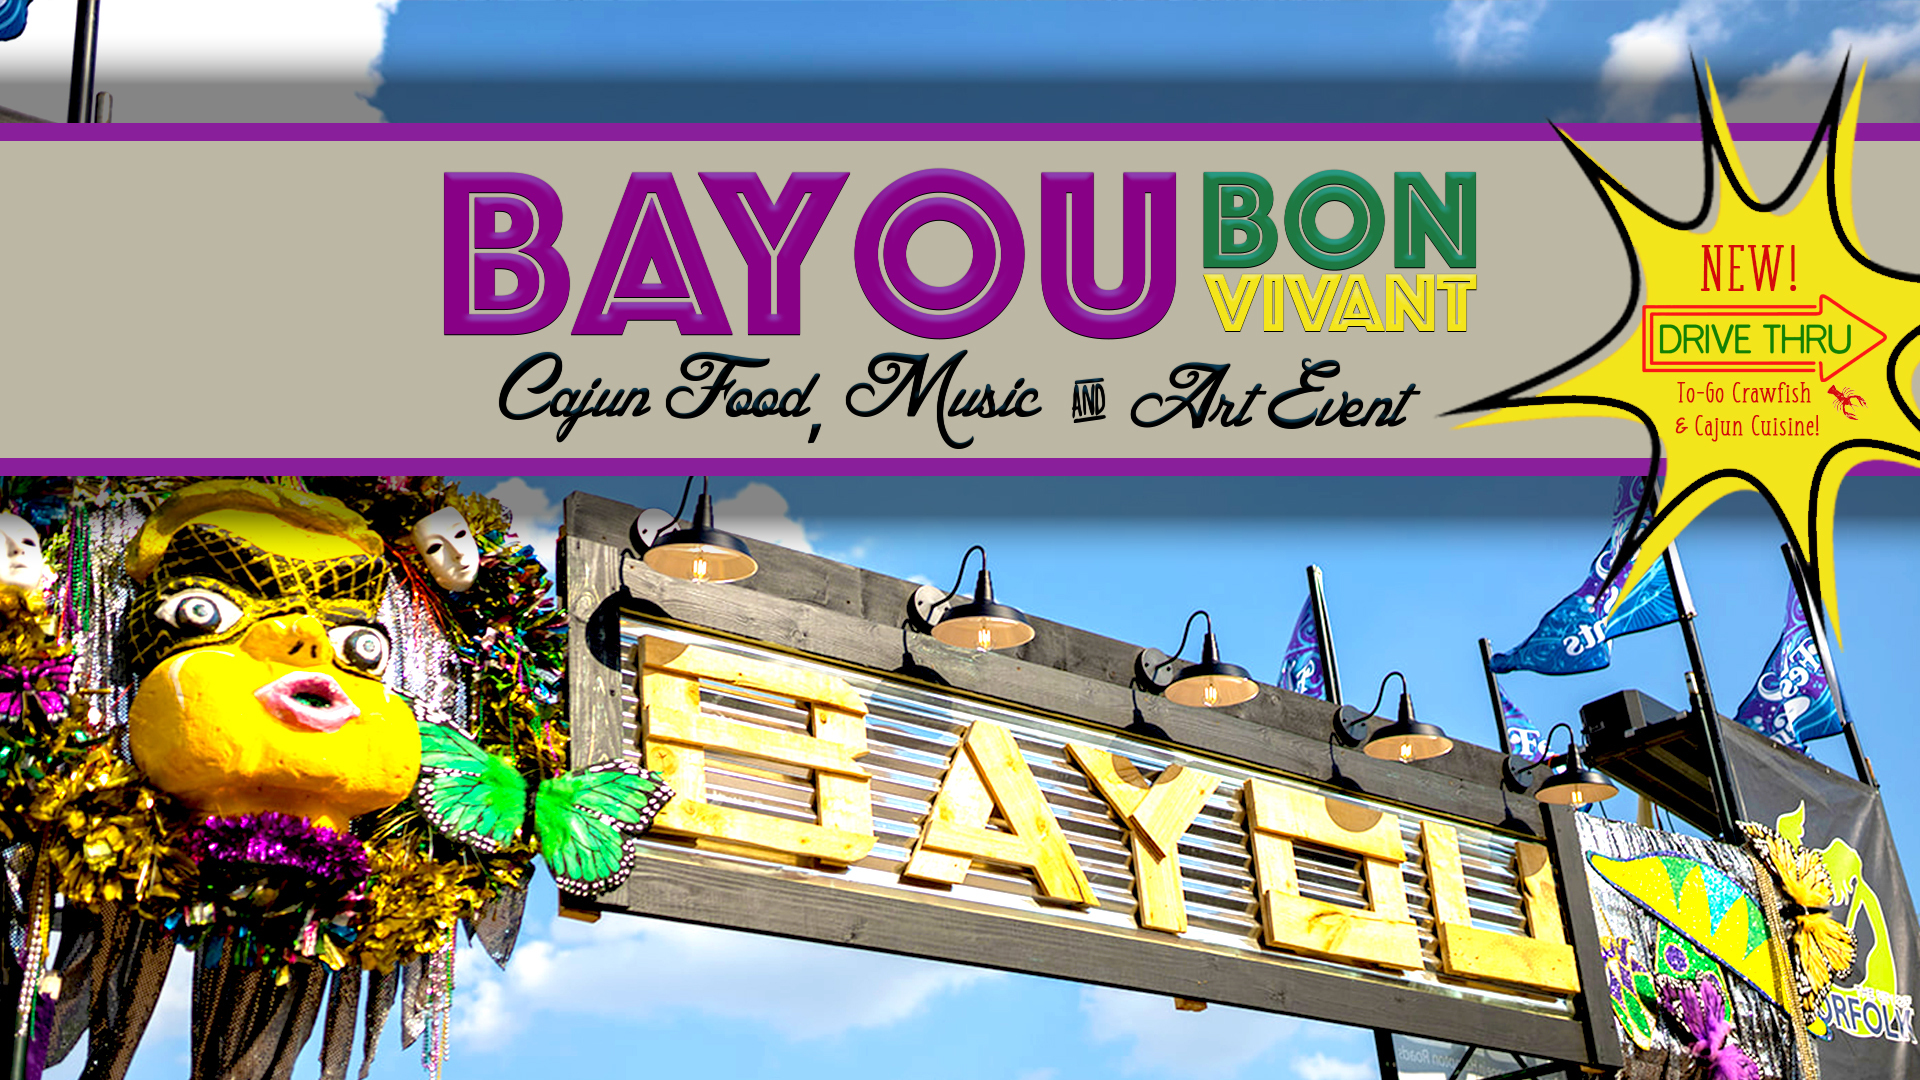 Festevents Bayou Bon Vivant Cajun Music, Food & Art Celebration